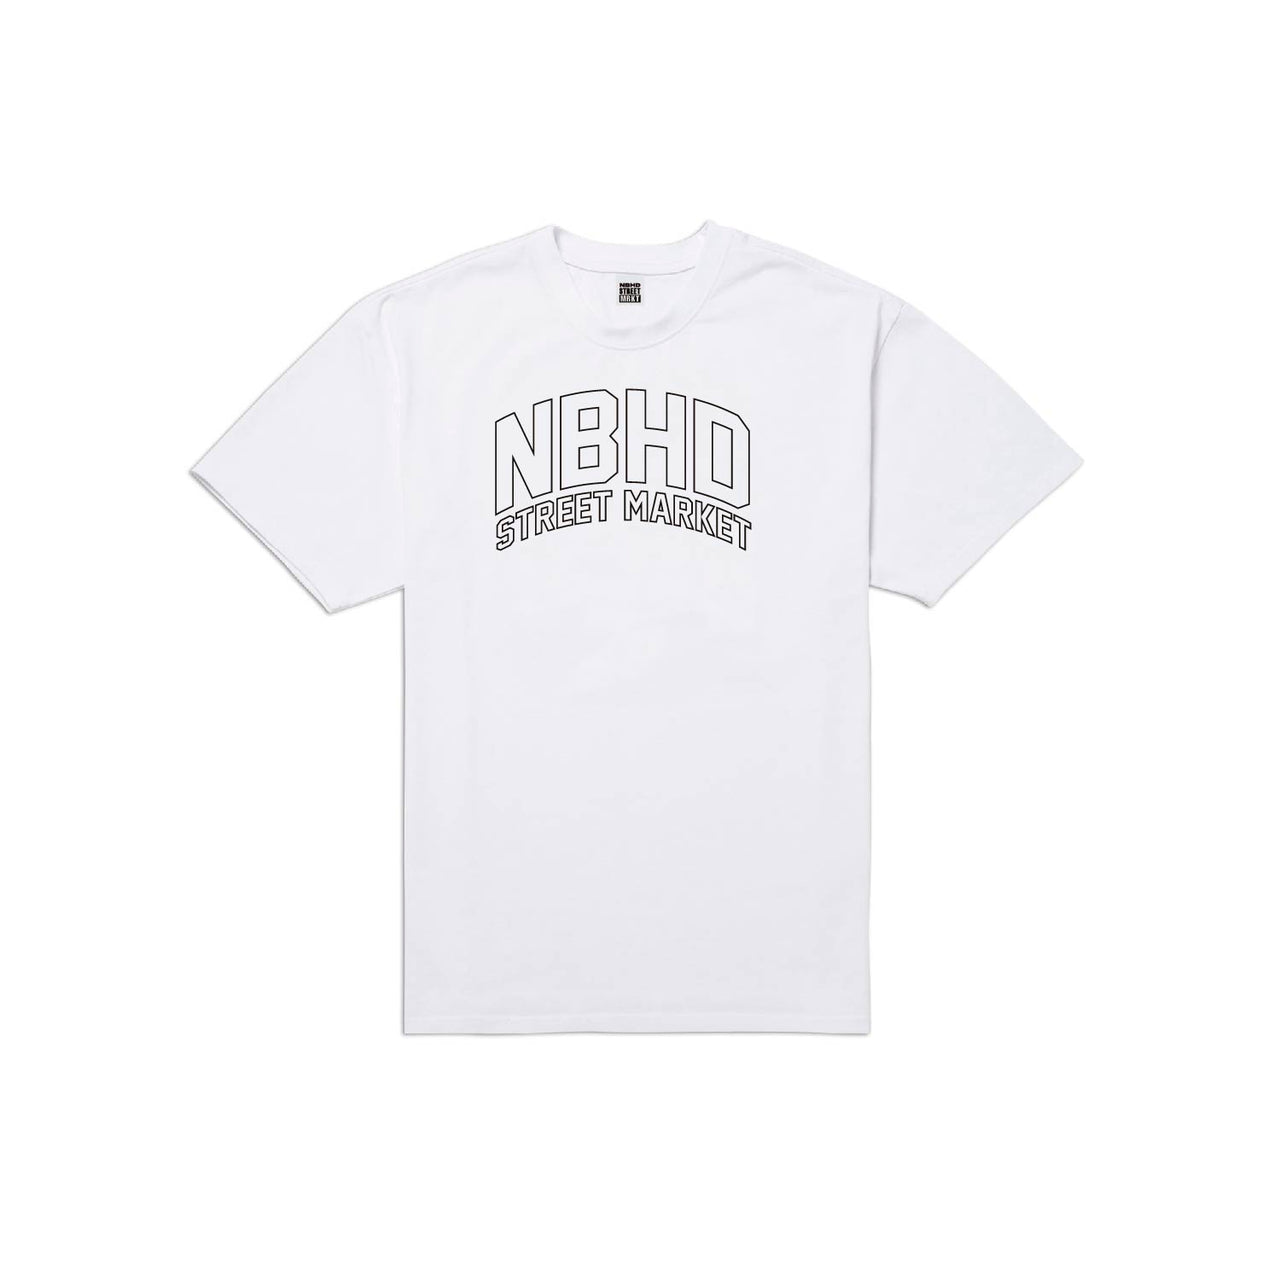 NHBD Streetmarket Logo T-shirt White